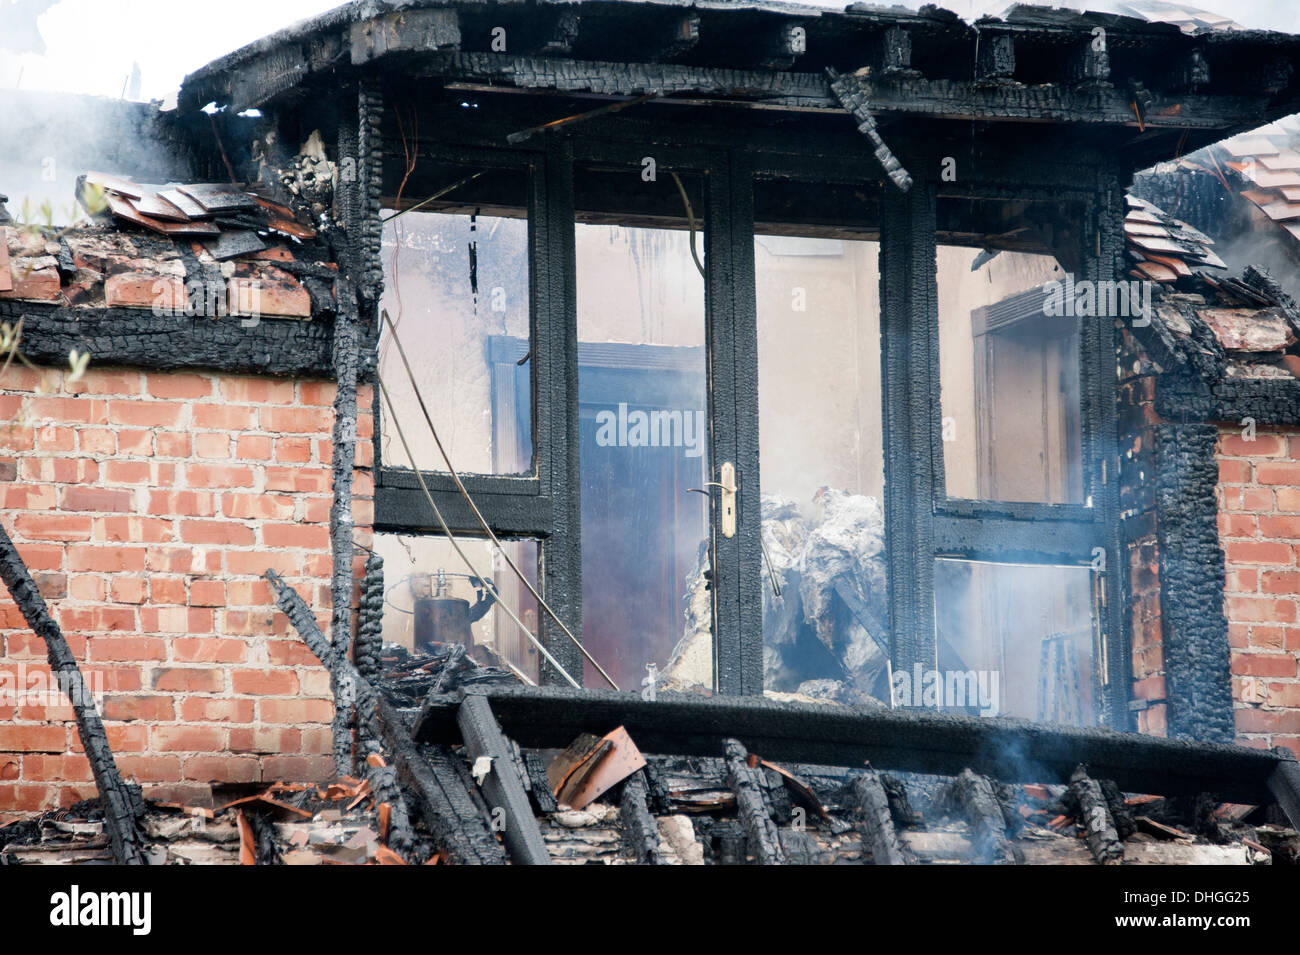 Dormer window house on fire charred burnt smoke Stock Photo